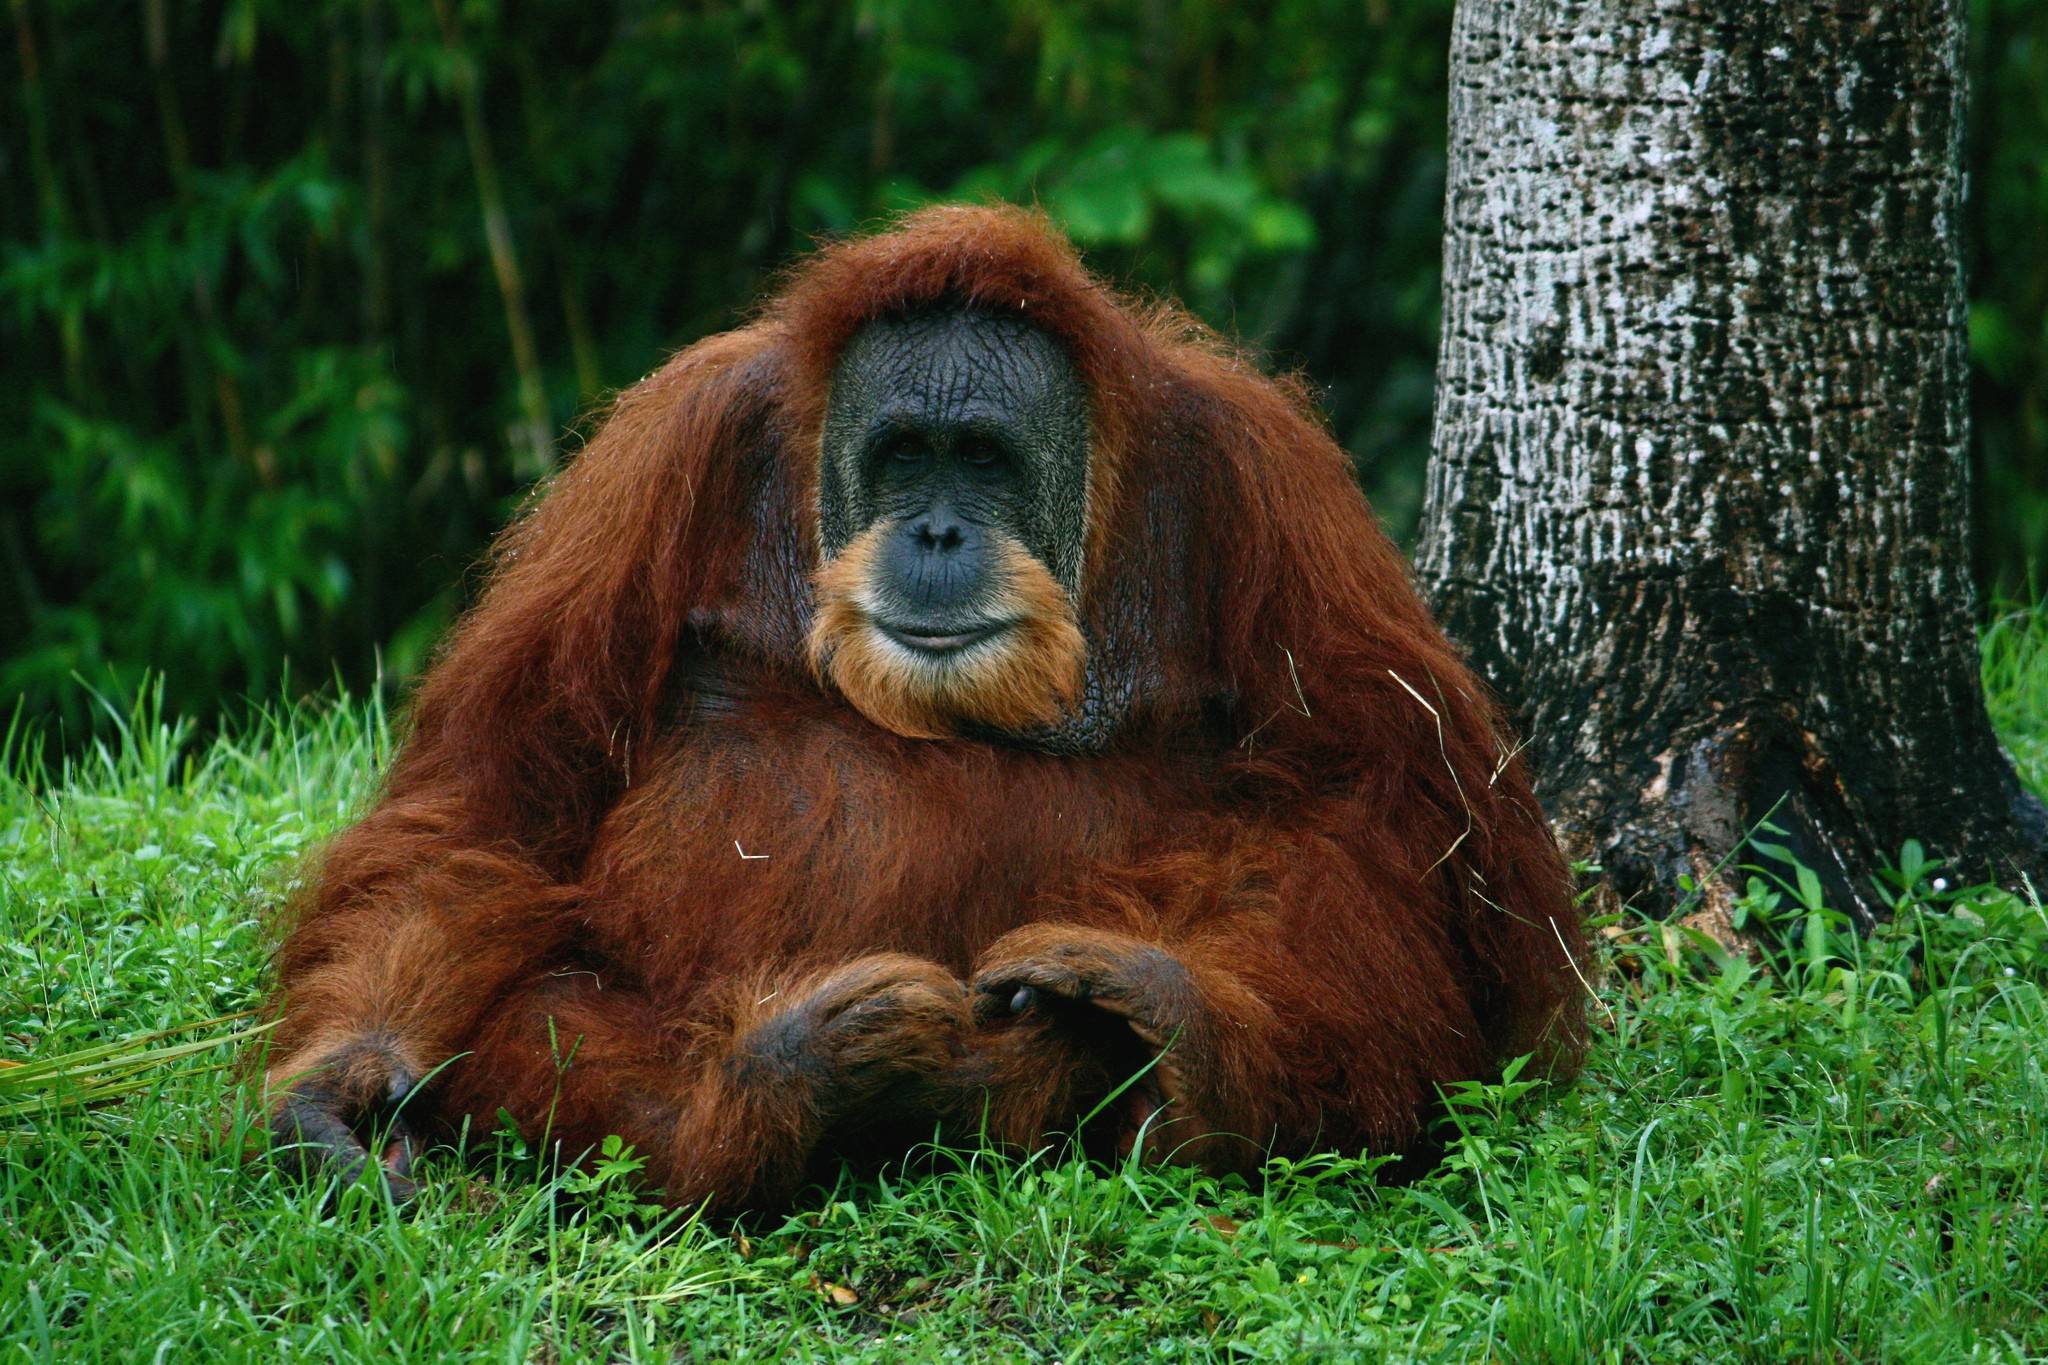 orangutan iPhone Wallpapers Free Download